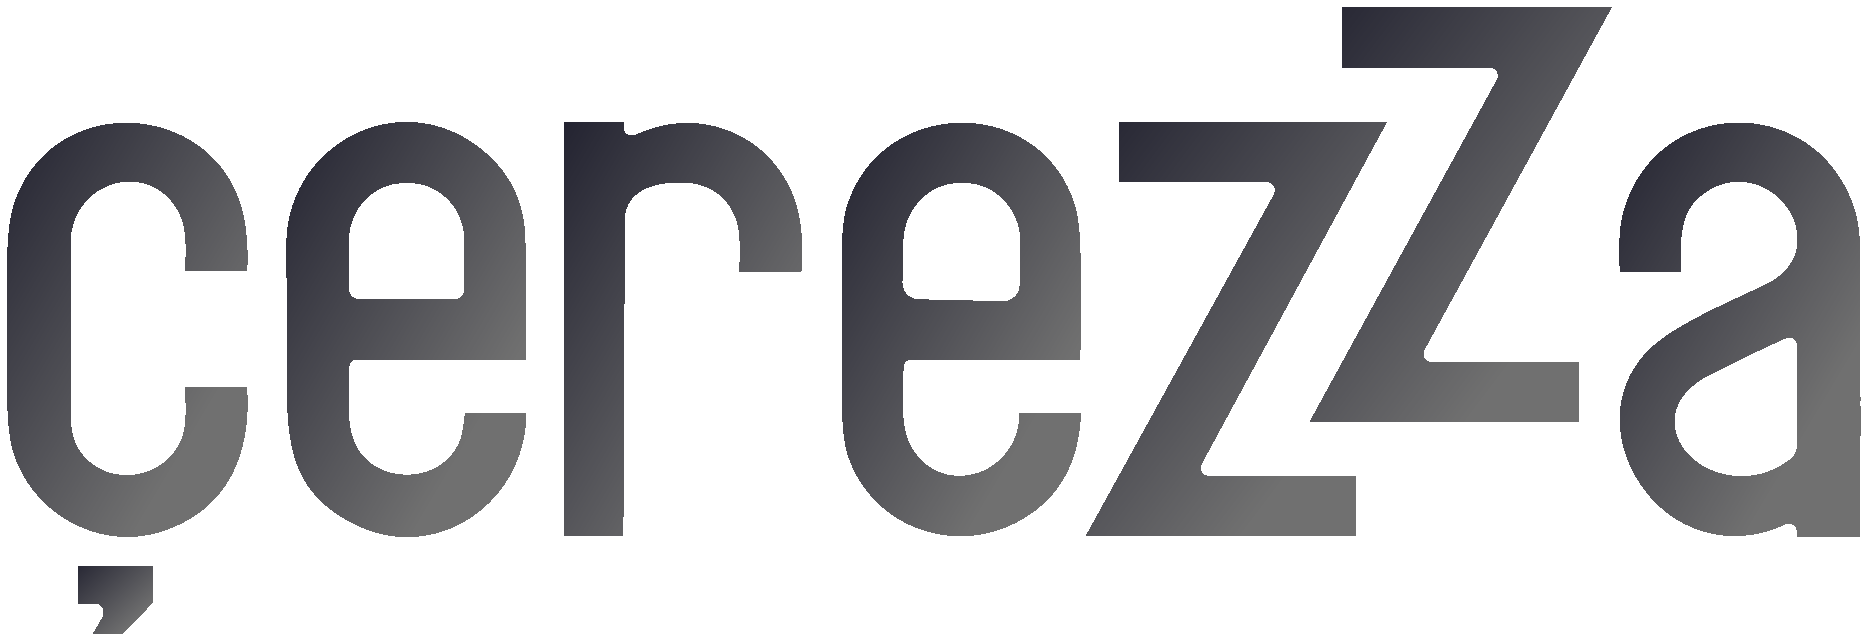 ÇerezZa Logo Vector